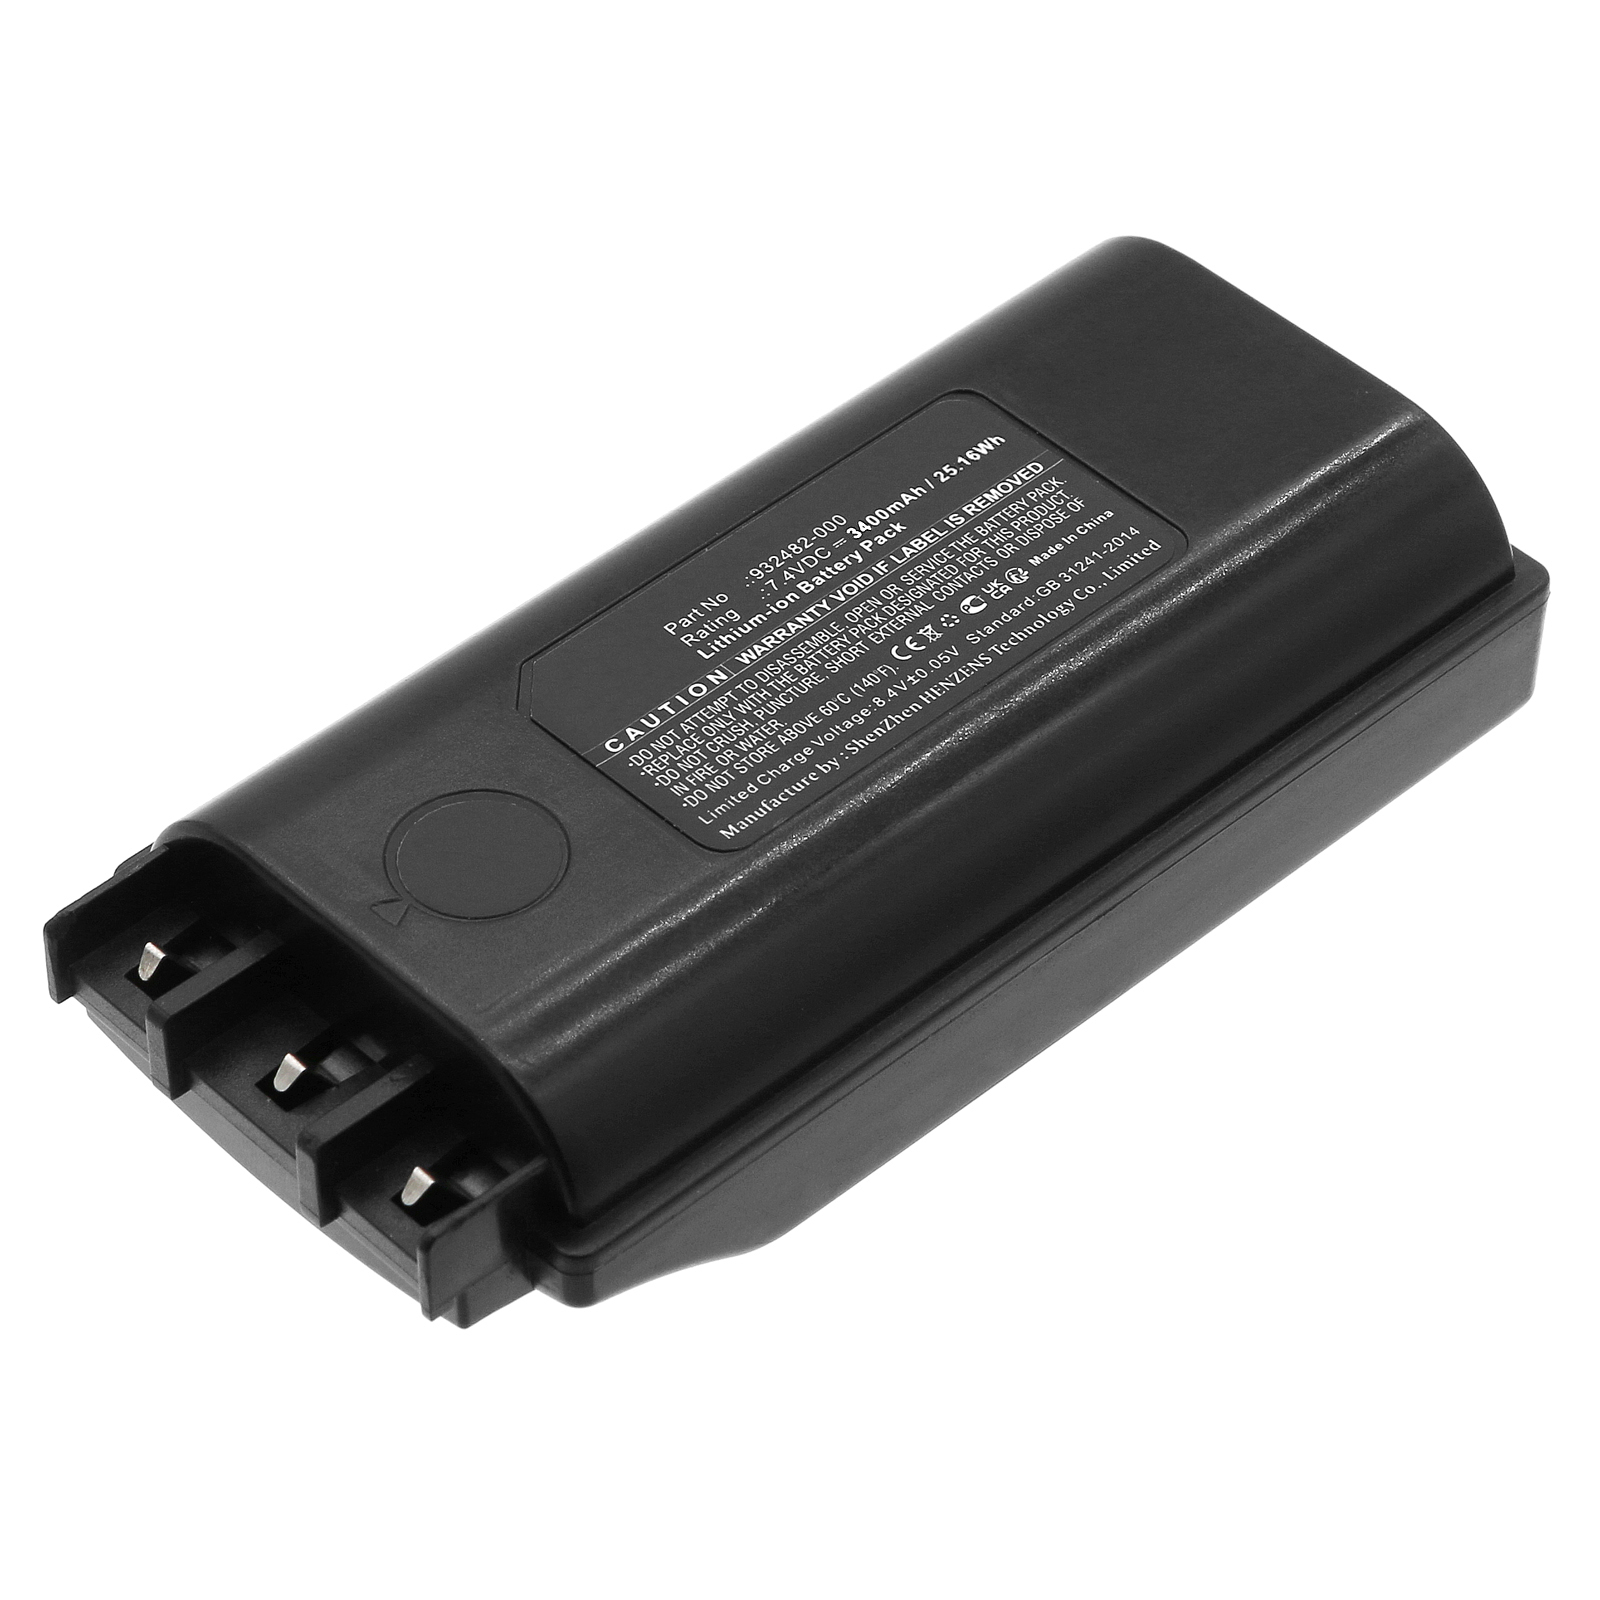 Synergy Digital Remote Control Battery, Compatible with Akerstroms 365-2000 Remote Control Battery (Li-ion, 7.4V, 3400mAh)